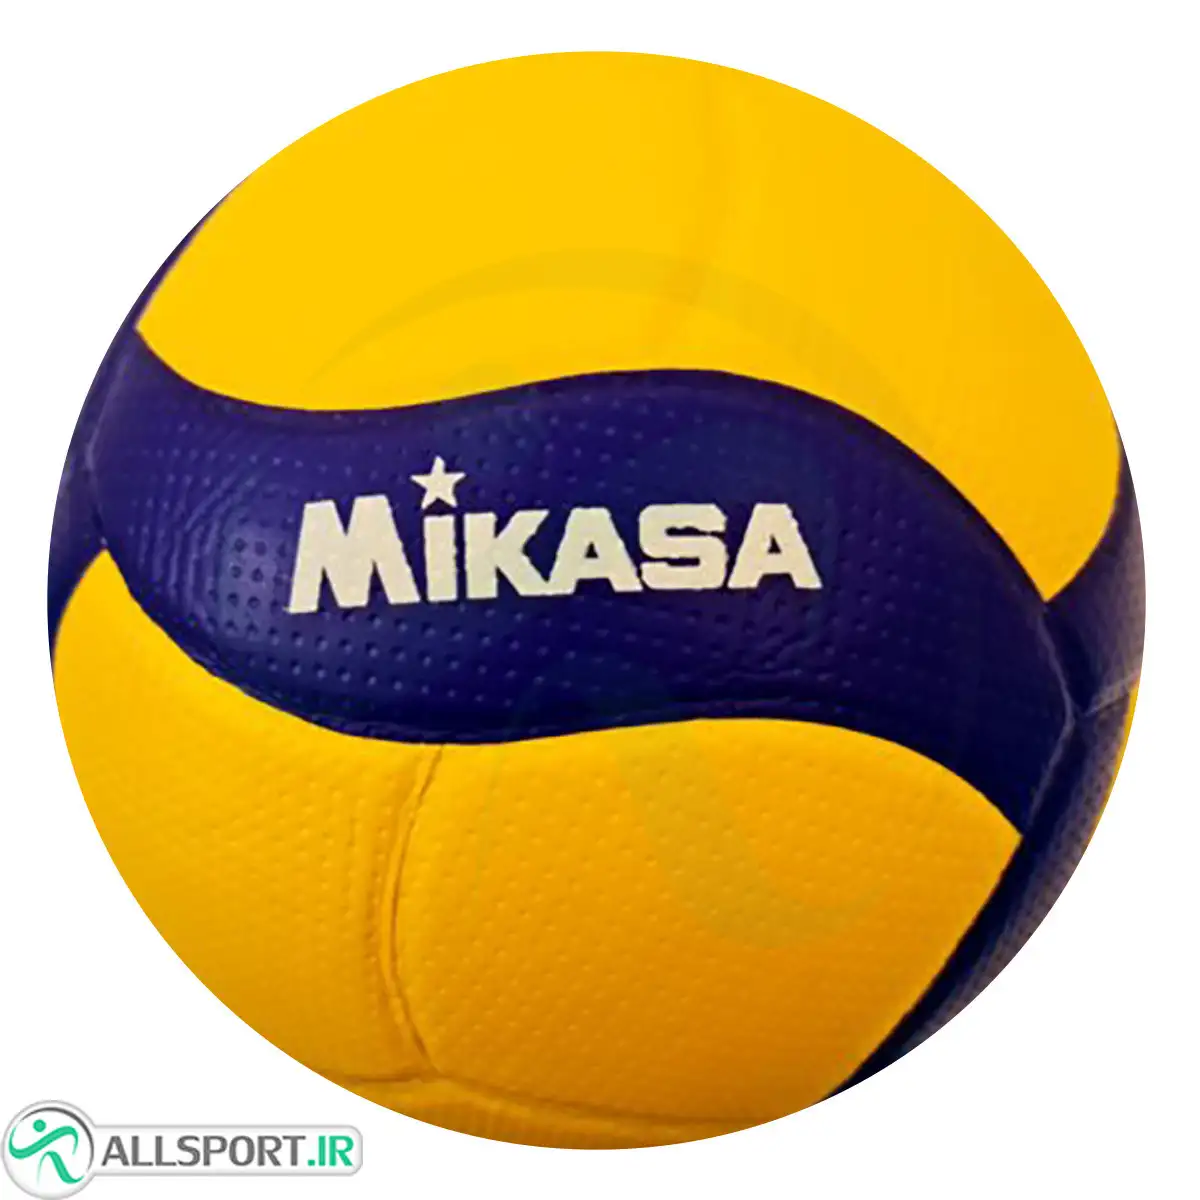 picture توپ والیبال میکاسا   Volleyball MikasaYellow Blue